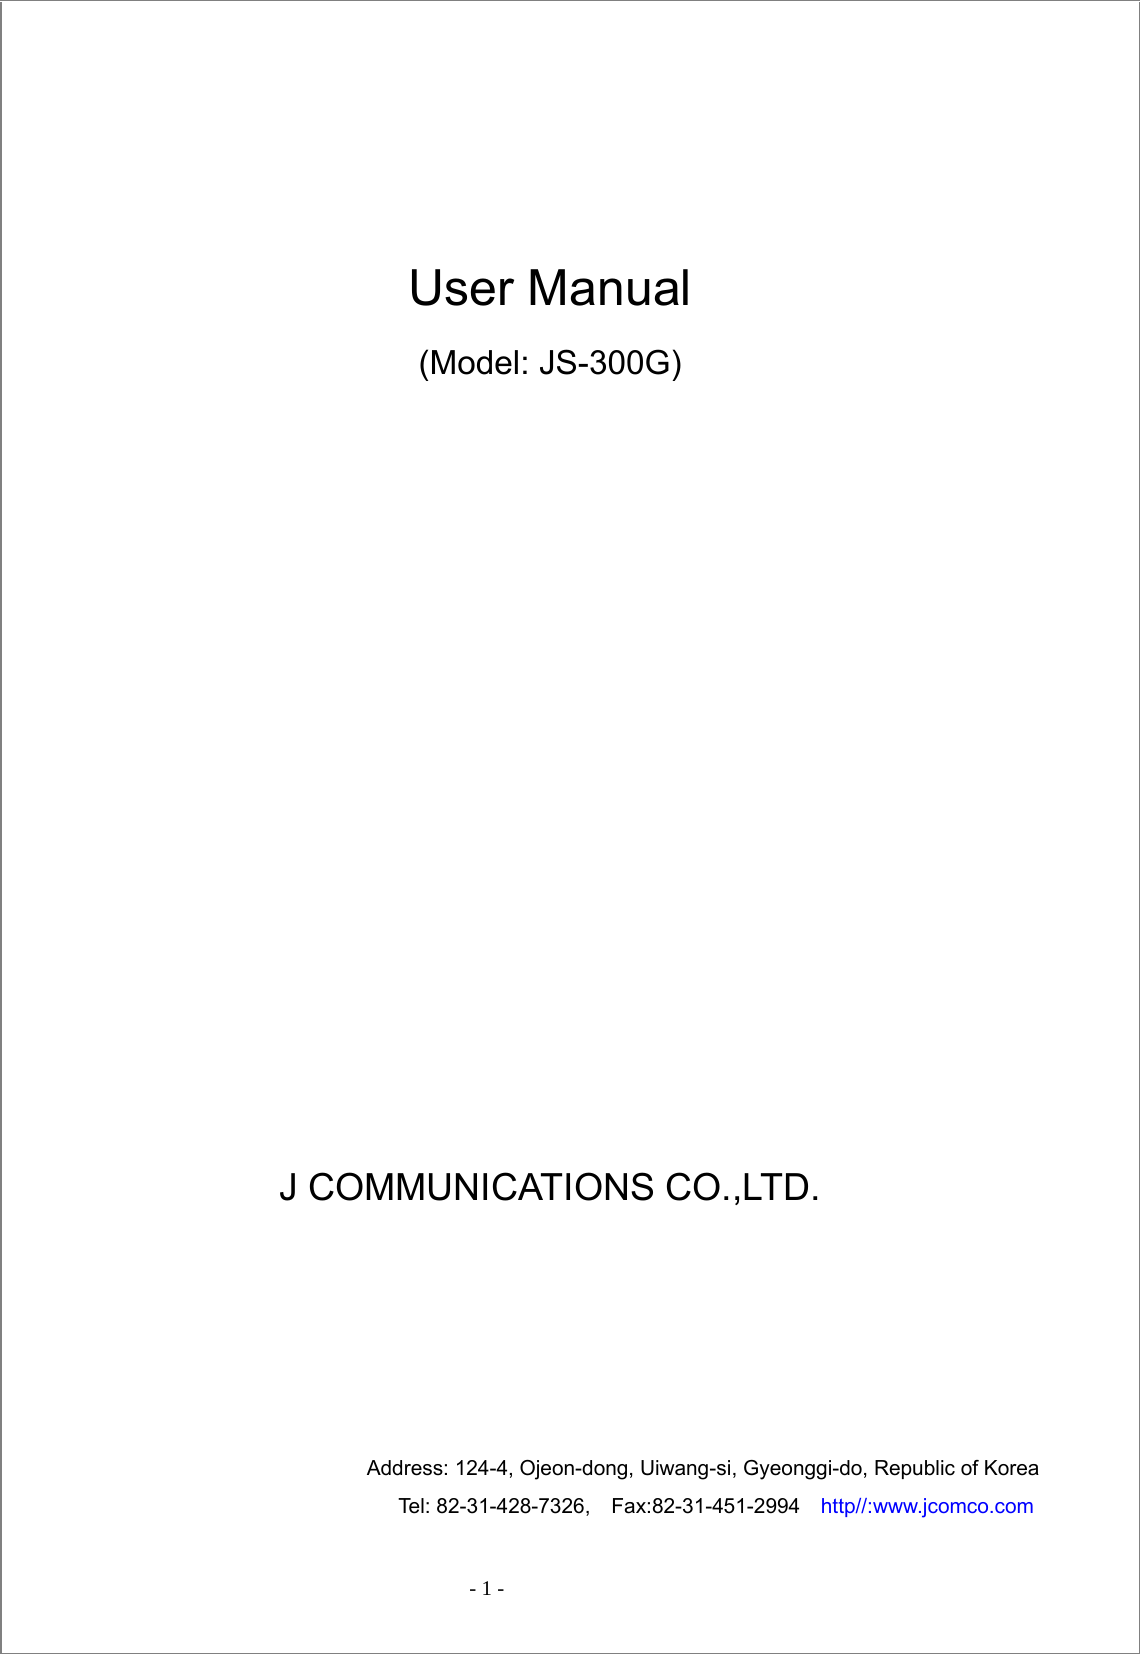  - 1 -       User Manual (Model: JS-300G)           J COMMUNICATIONS CO.,LTD.                                   Address: 124-4, Ojeon-dong, Uiwang-si, Gyeonggi-do, Republic of Korea                                   Tel: 82-31-428-7326,  Fax:82-31-451-2994  http//:www.jcomco.com 